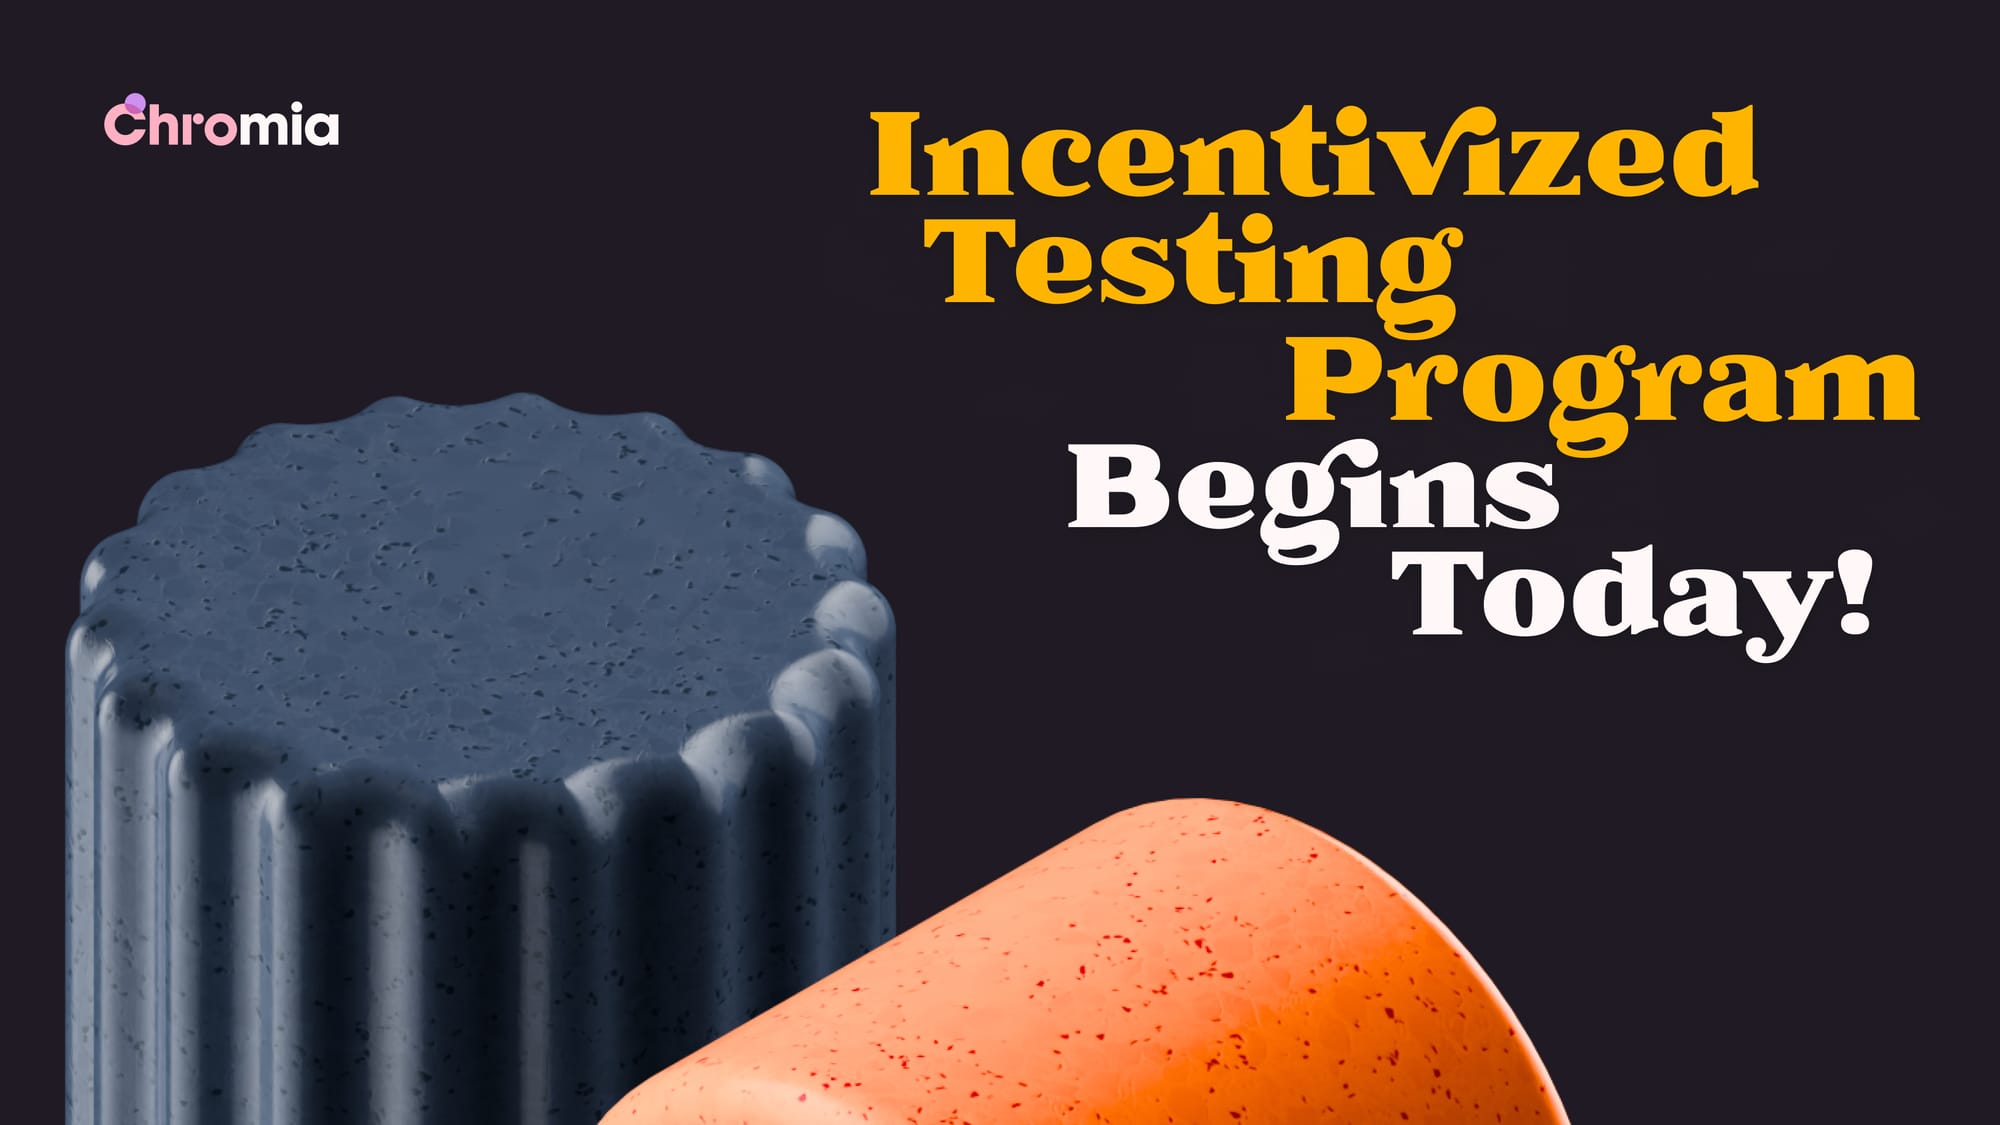 Chromia’s Incentivized Testing Program Begins Today!